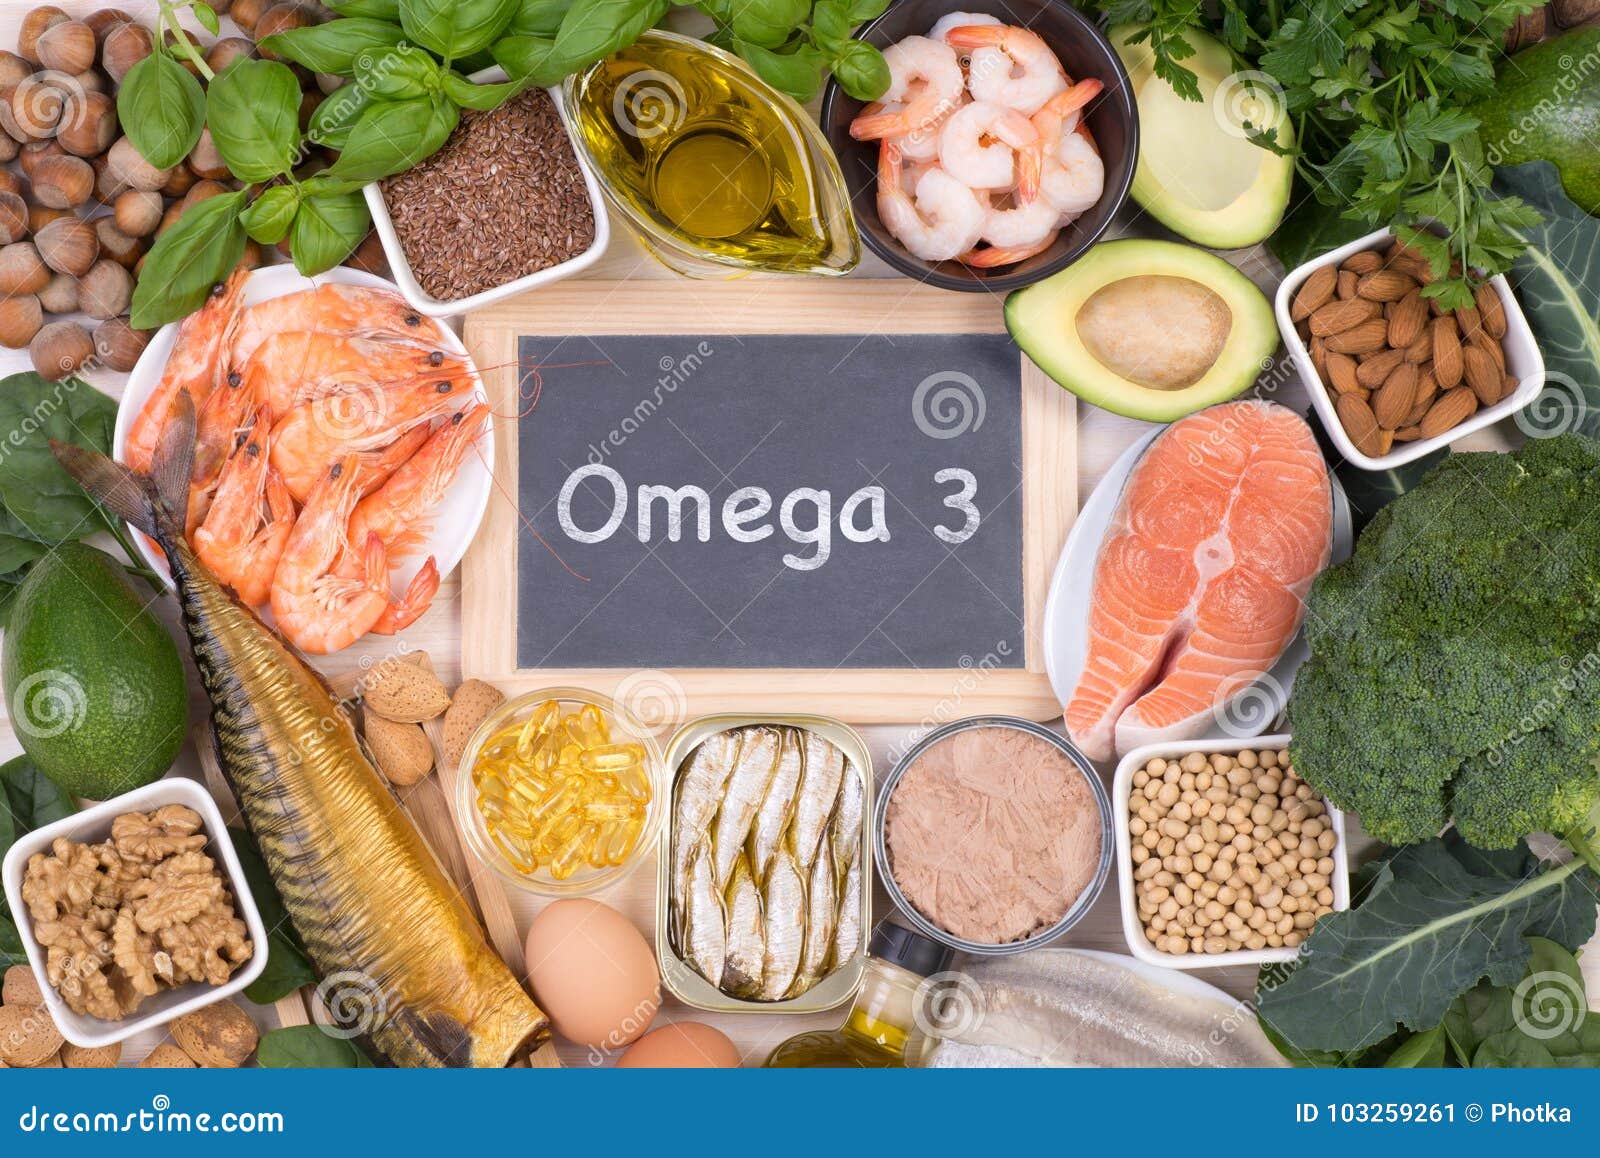 omega 3 fatty acids food sources